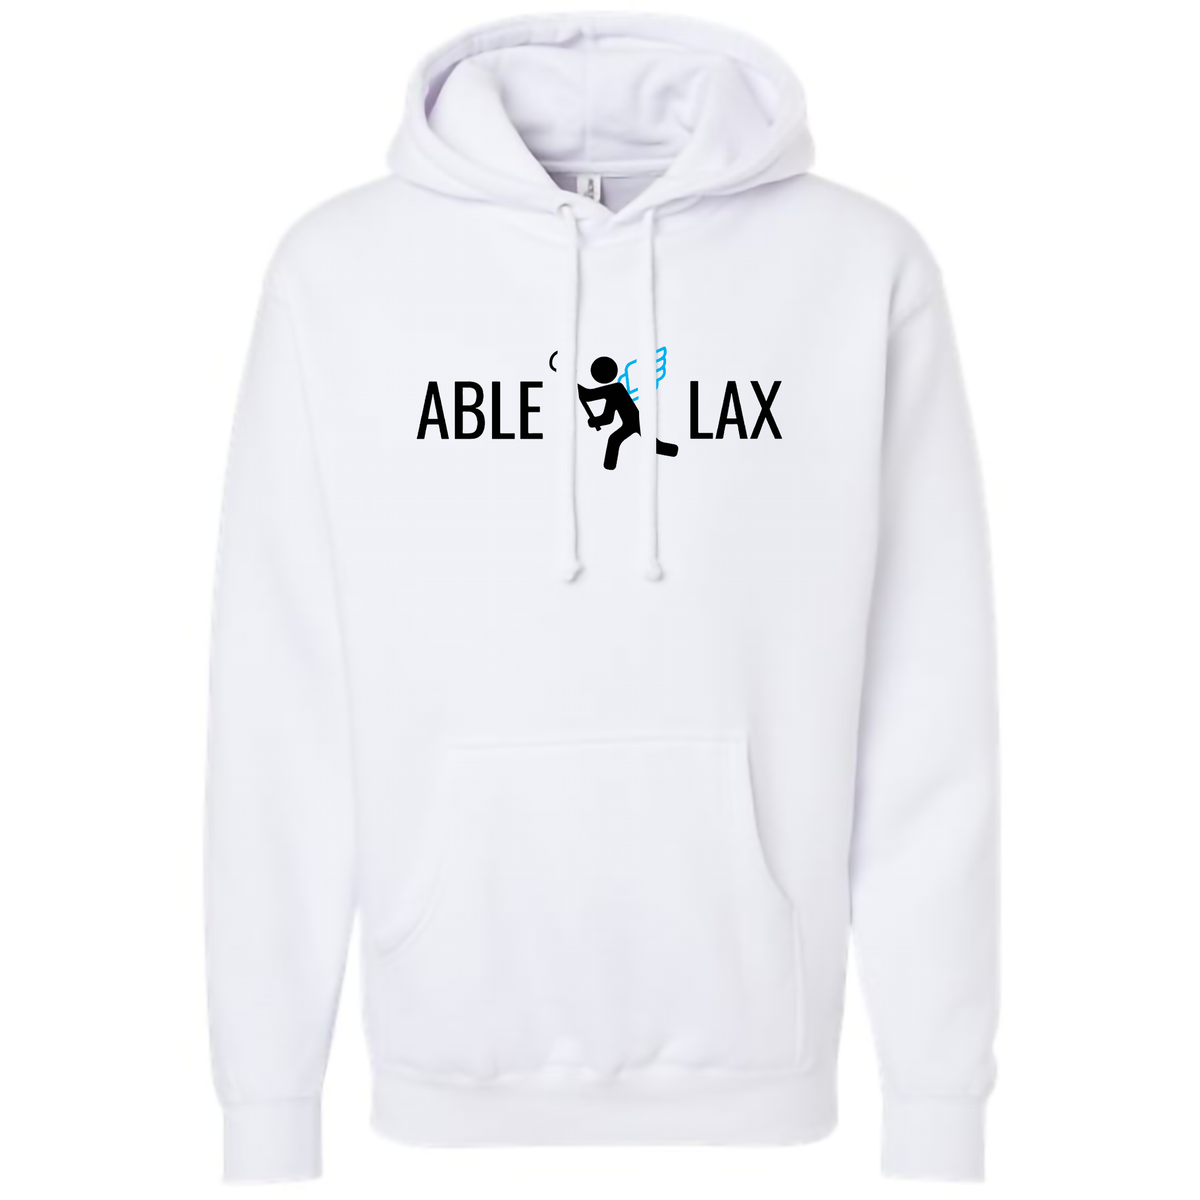 ABLE Lacrosse Sweatshirt